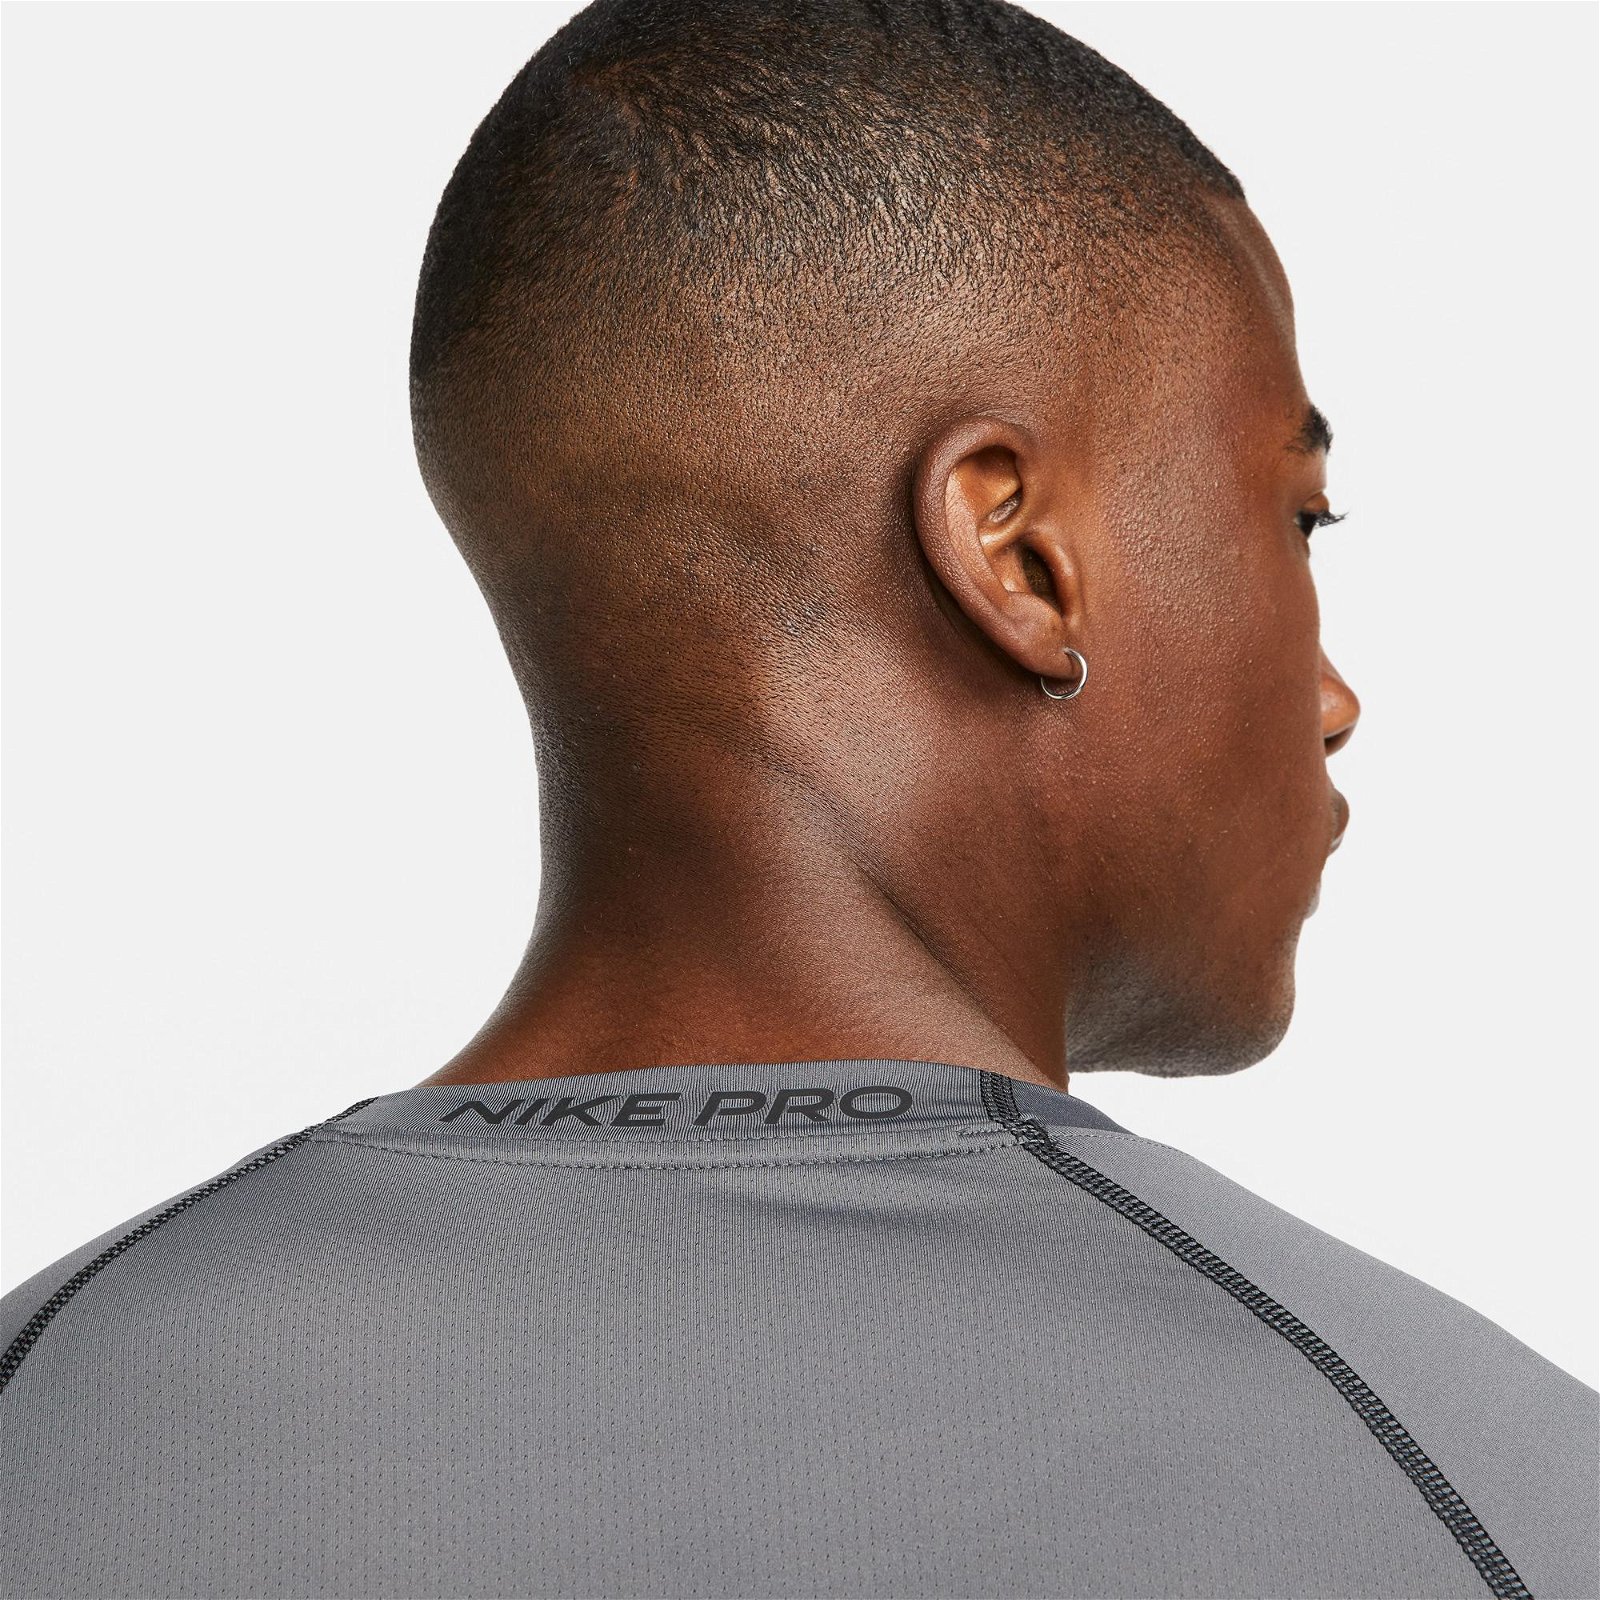  Nike Pro Dri-FIT Top Erkek Gri T-Shirt